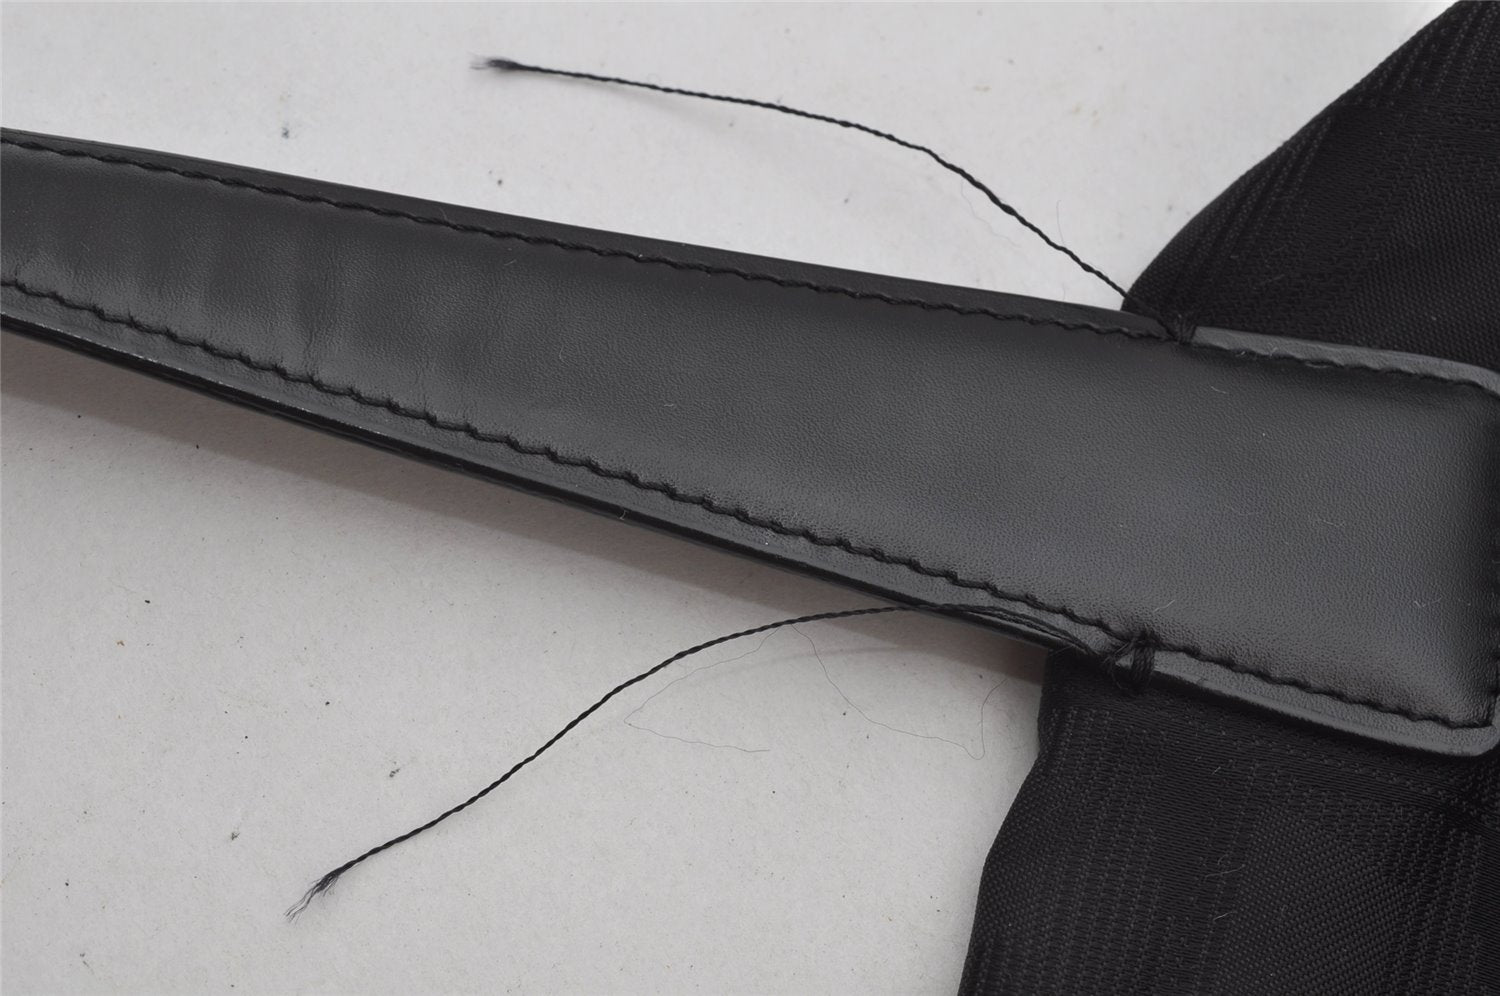 Authentic CHANEL New Travel Line Shoulder Tote Bag Nylon Leather Black 3105J